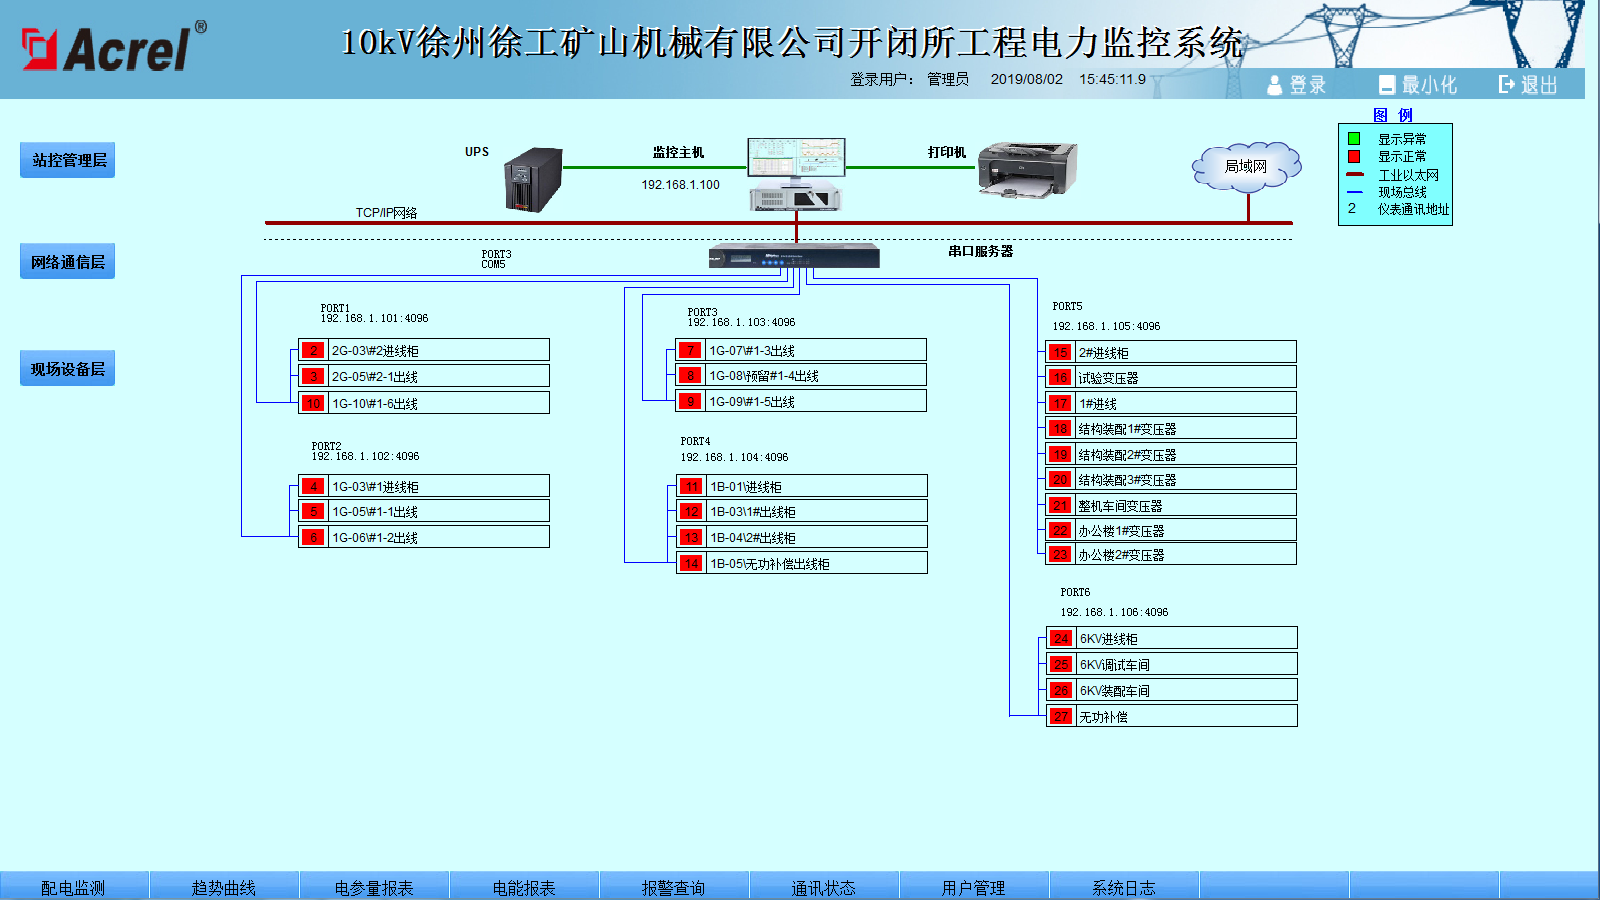 10kv徐州徐工矿机有限责任公司开闭工程用电监测系统设计及应用